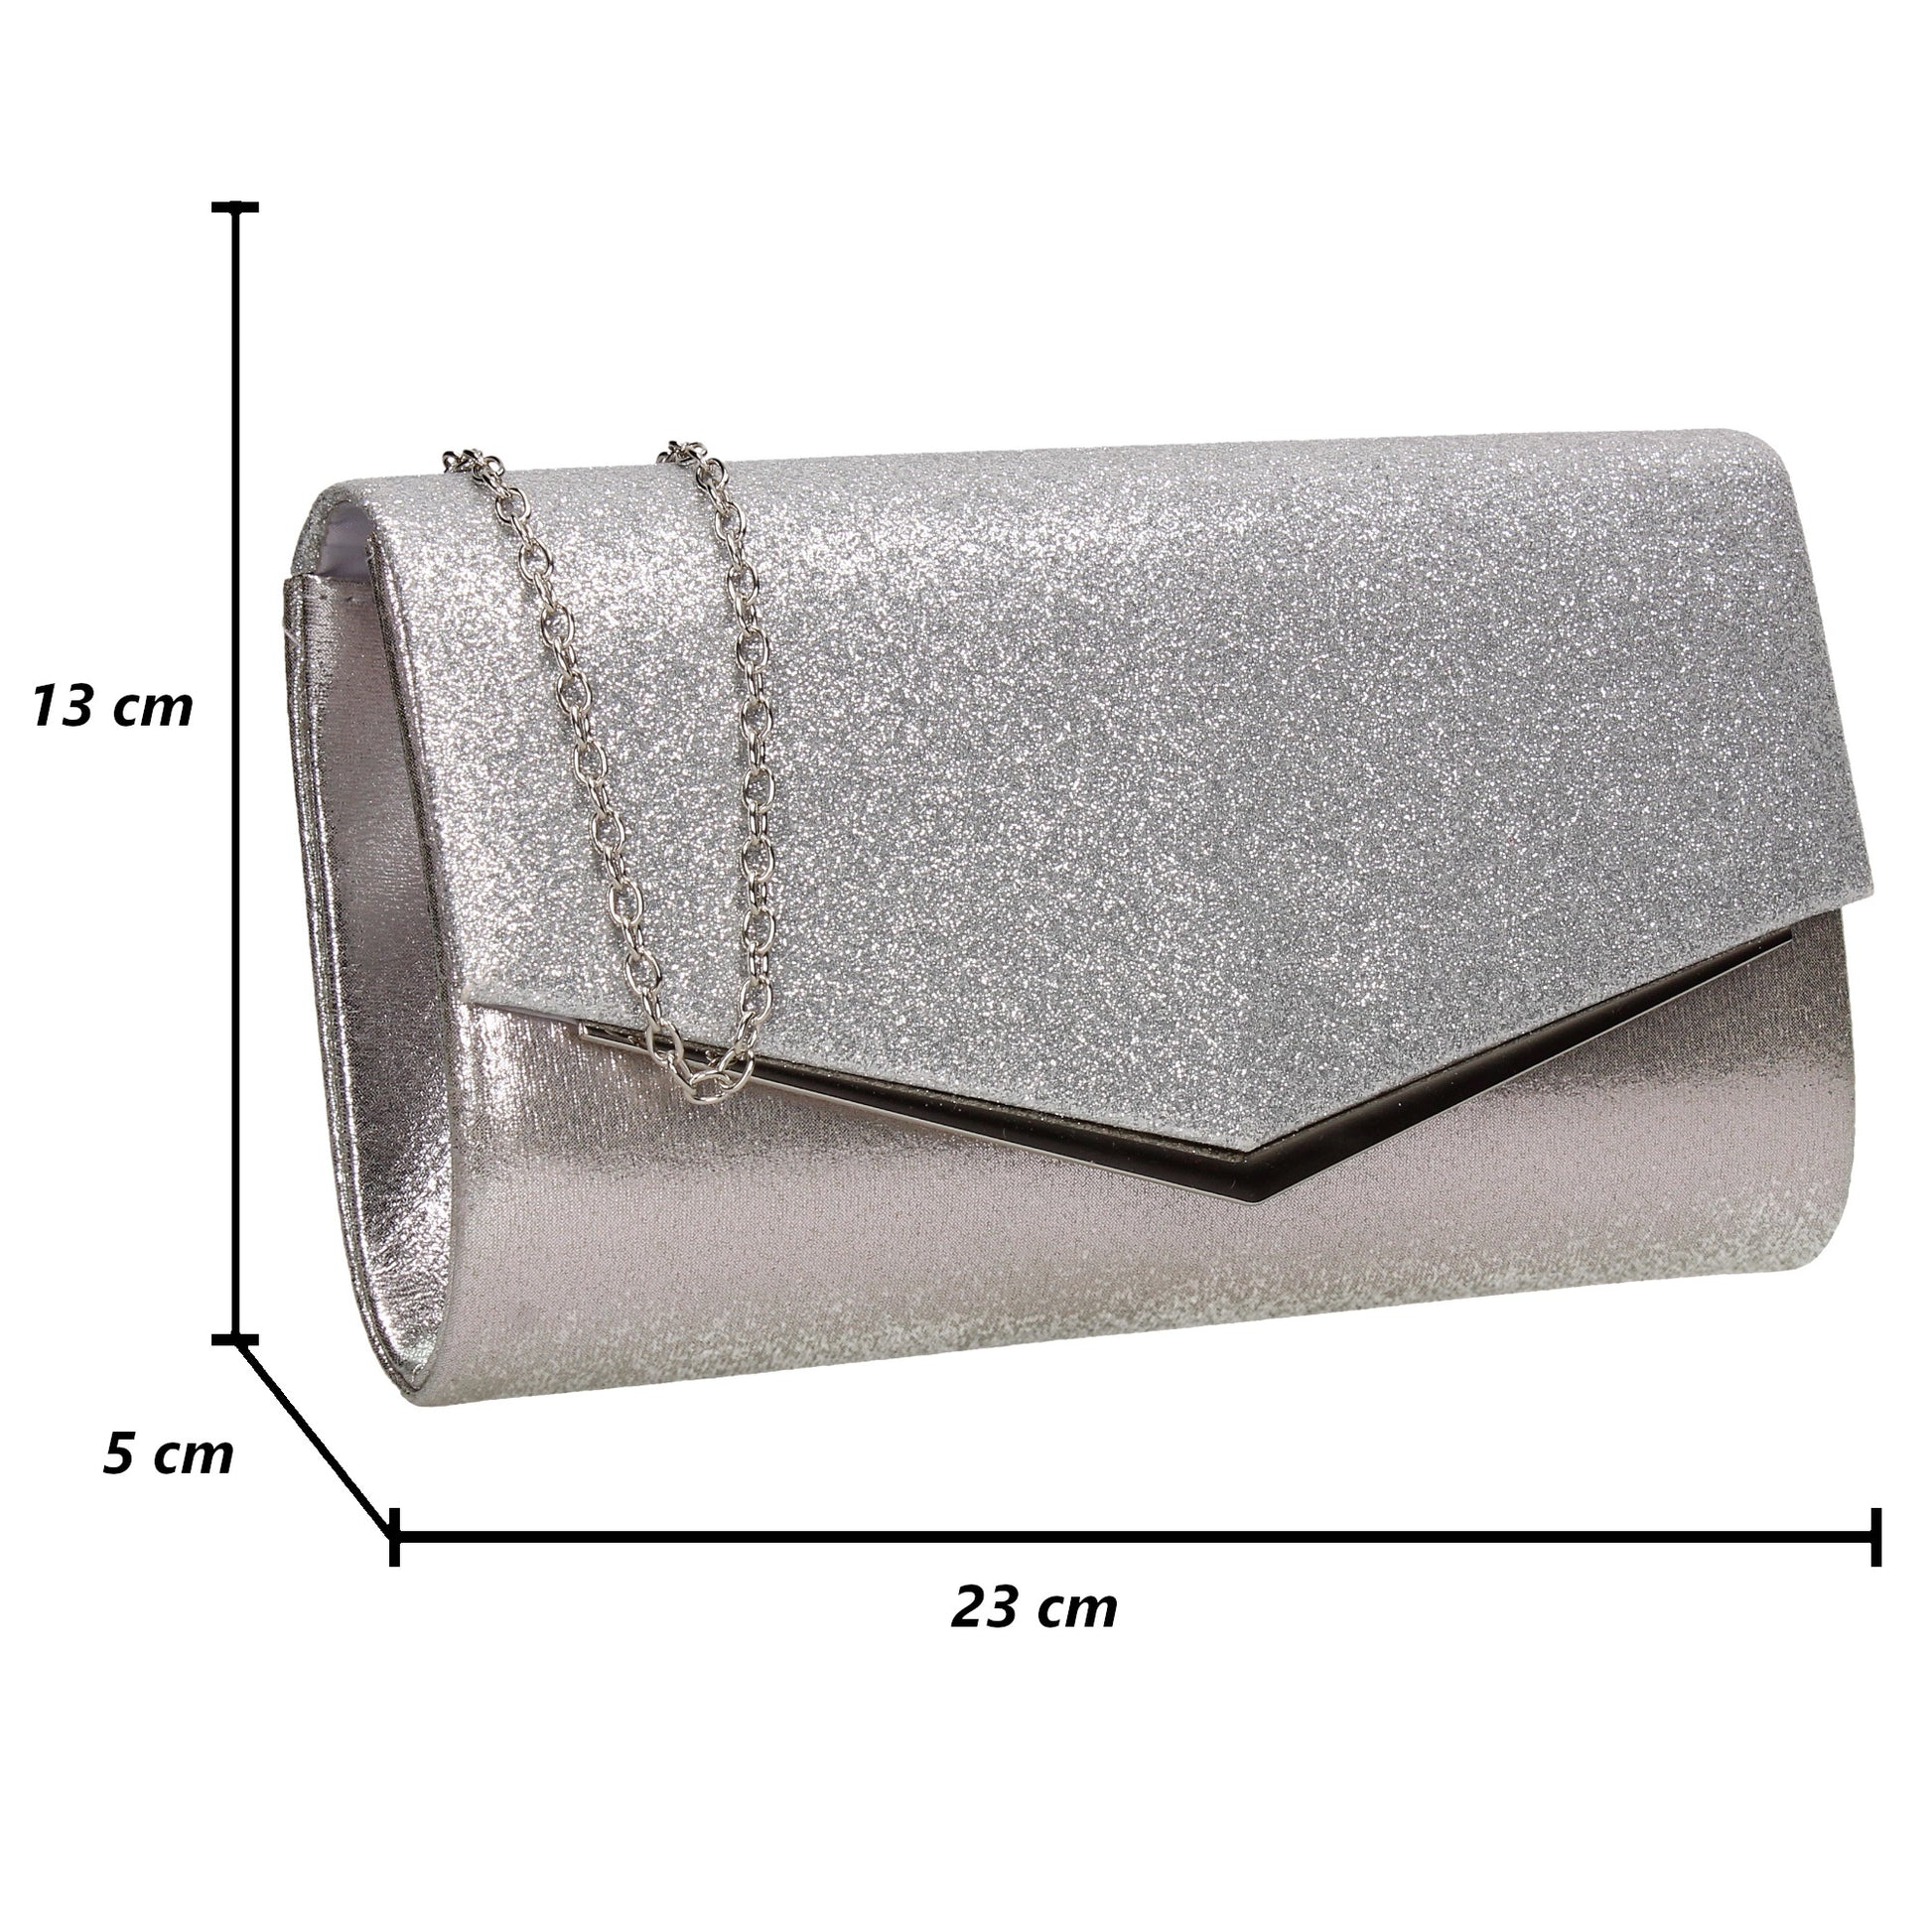 SWANKYSWANS Janey Clutch Bag Silver Cute Cheap Clutch Bag For Weddings School and Work